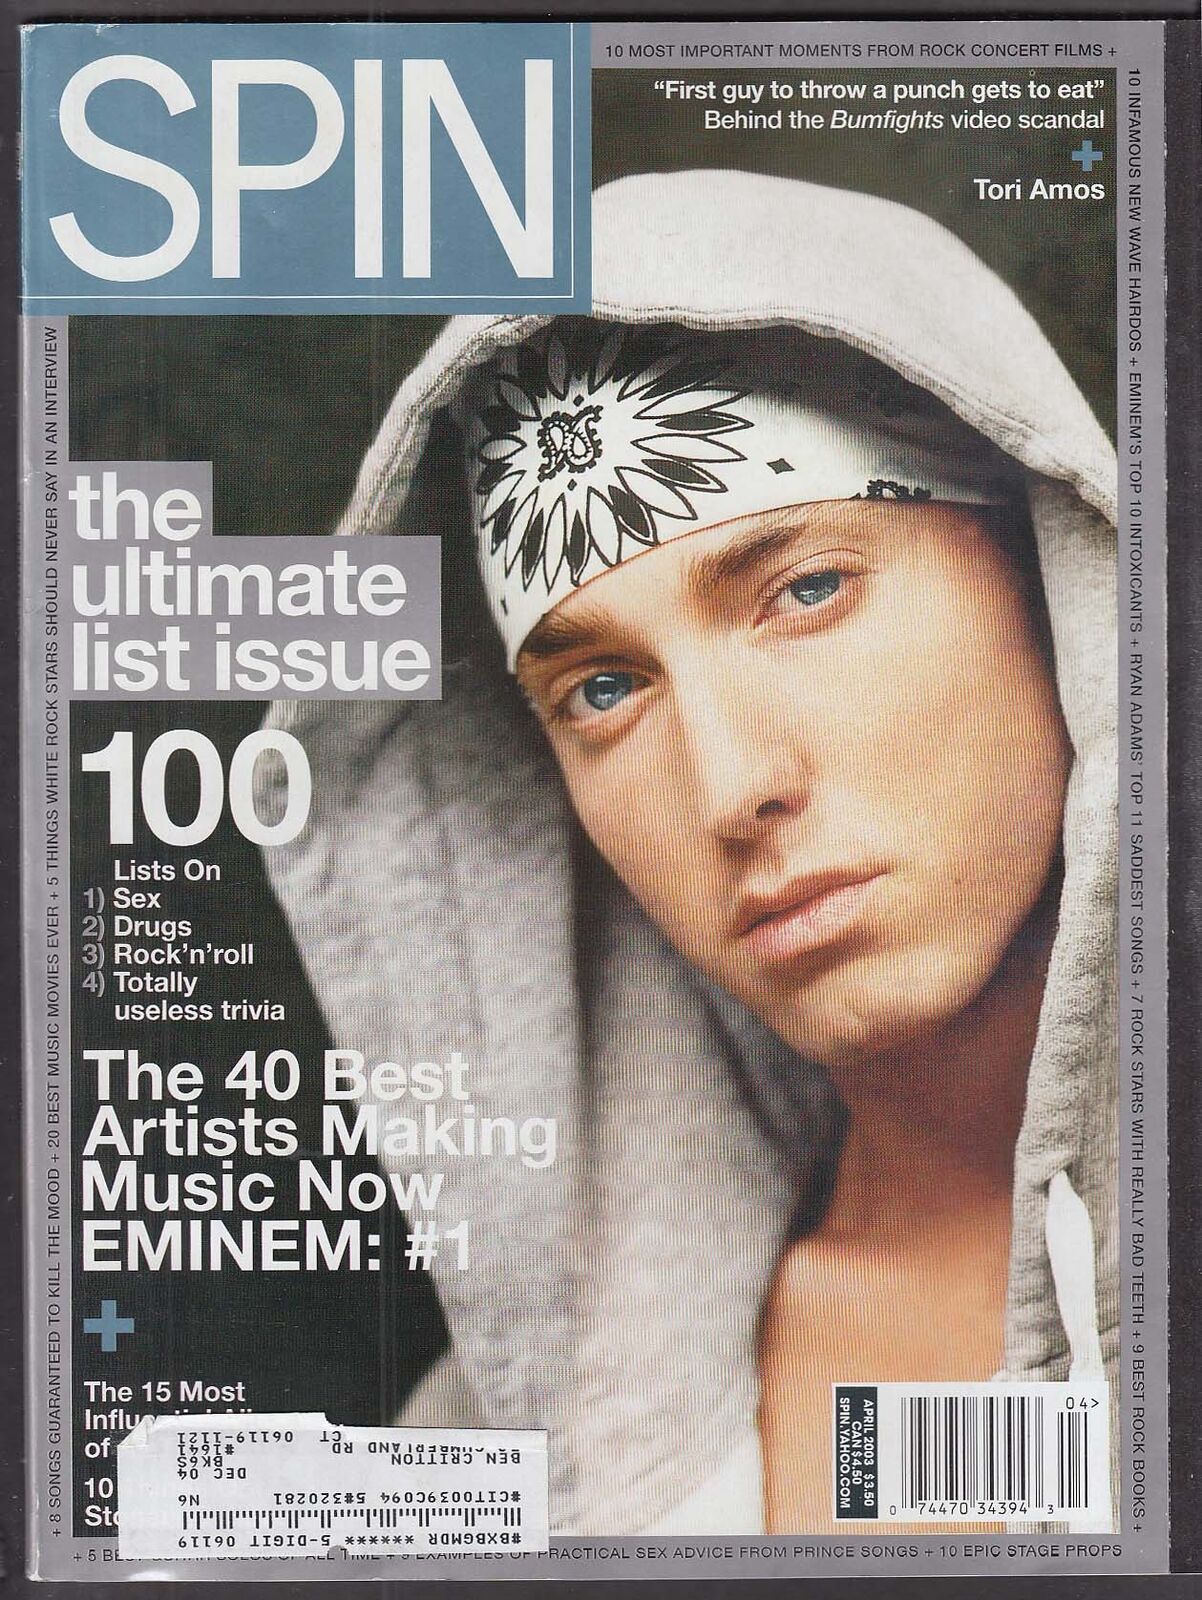 SPIN Eminem Tori Amos Bumfights Prince U2 Rapture + 4 2003